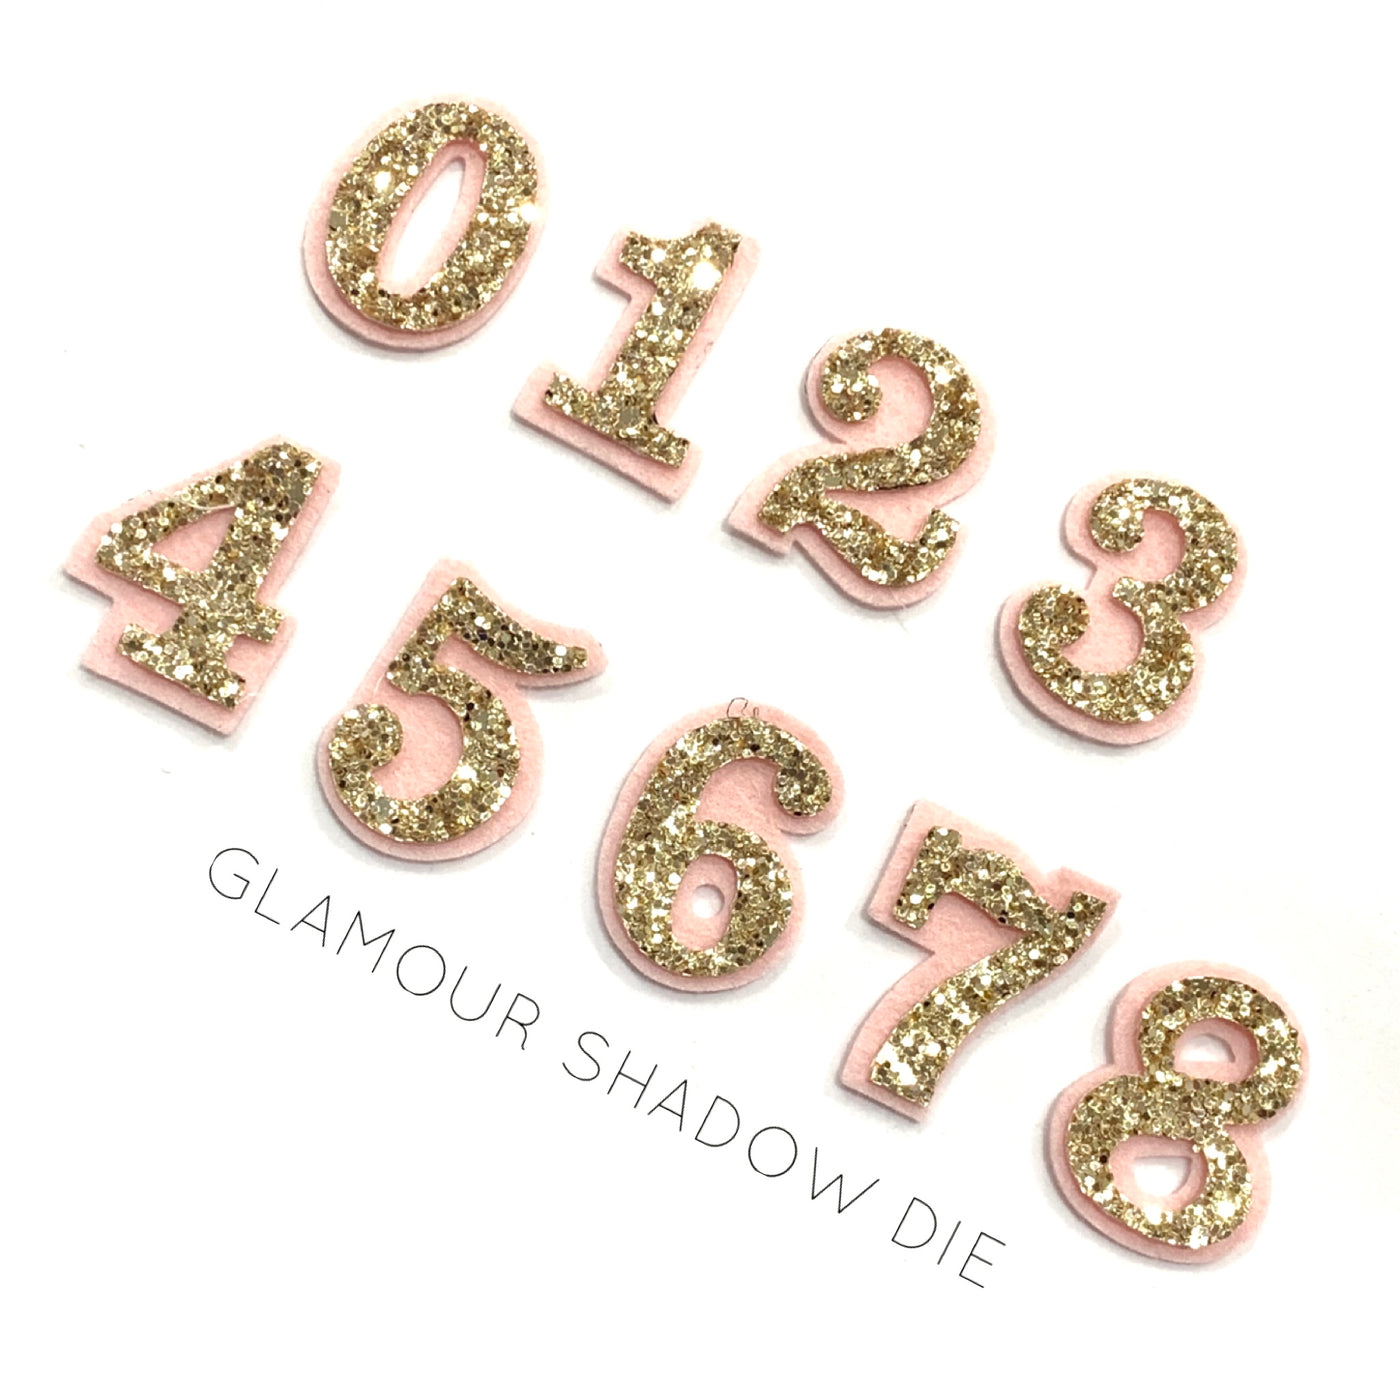 Glamour Shadow Die - Steel Rule Combo - Sizzix Big Shot